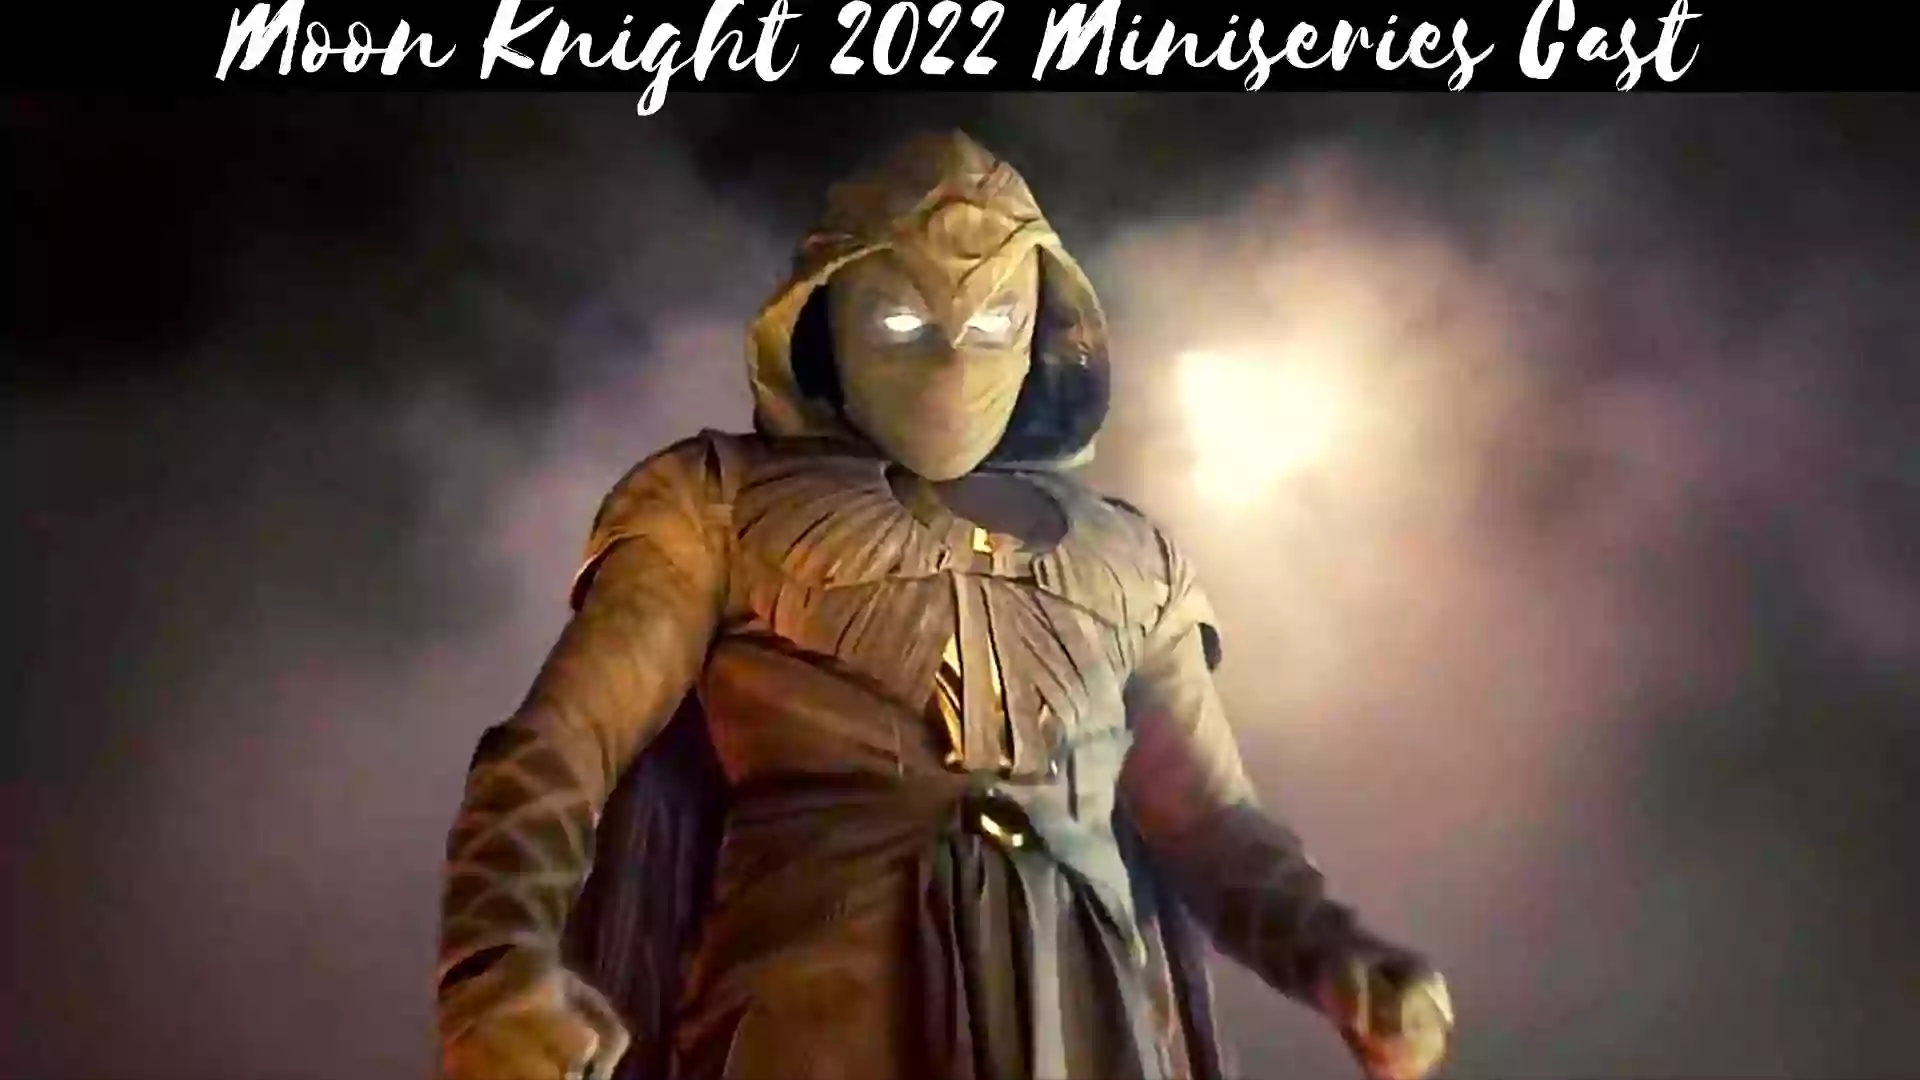 Moon Knight Cast | Moon Knight 2022 Miniseries Cast